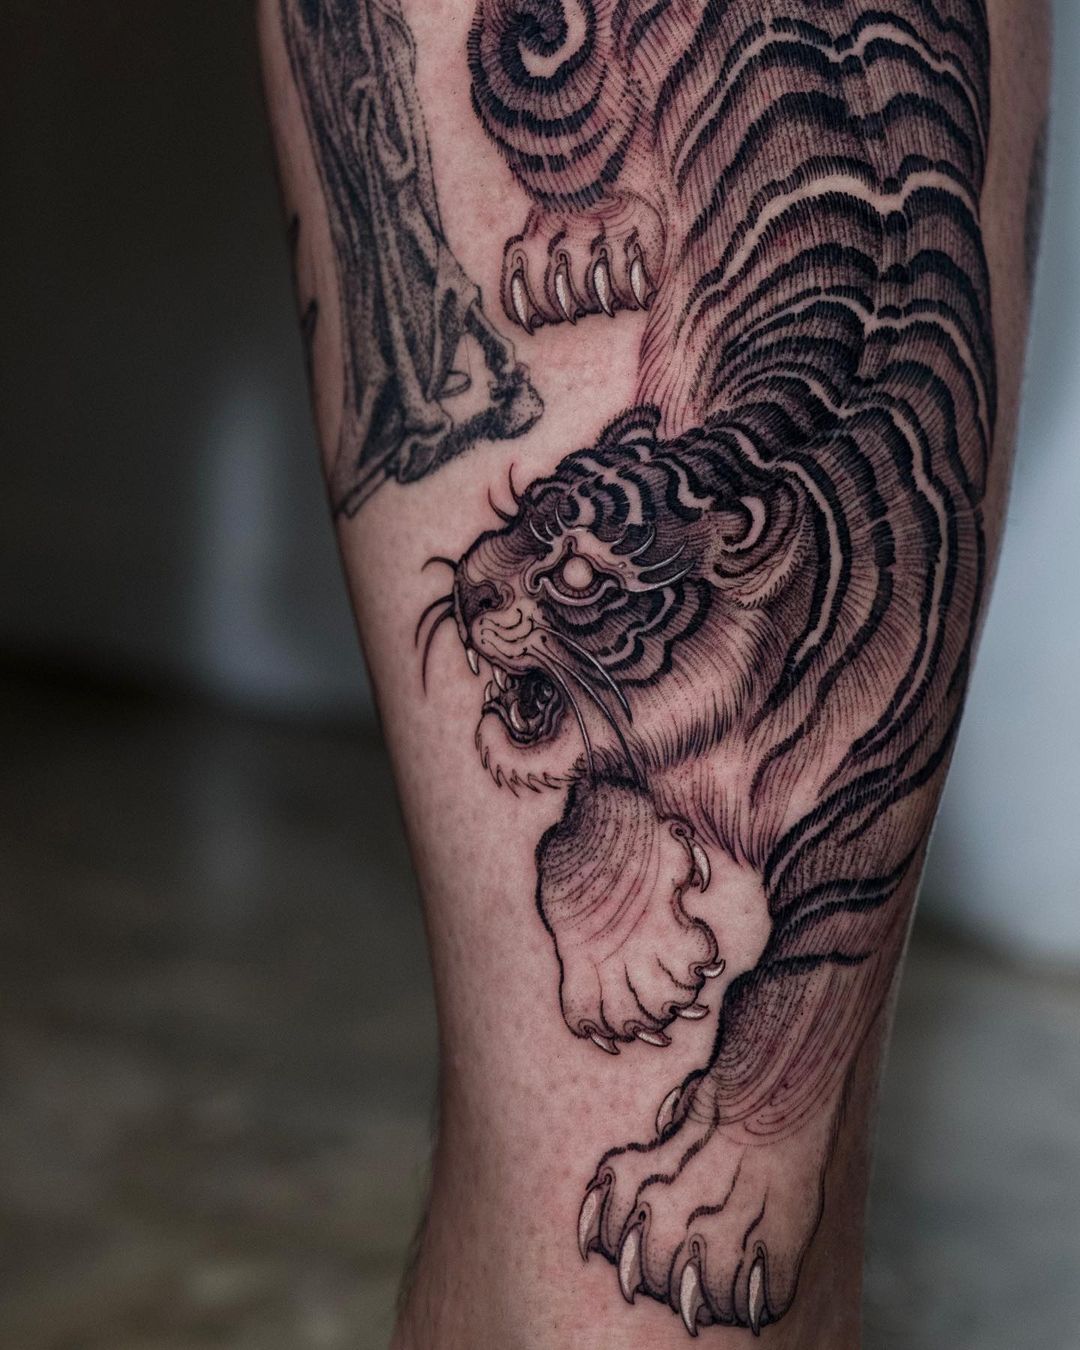 Tiger portrait tattoo design by arang eleven